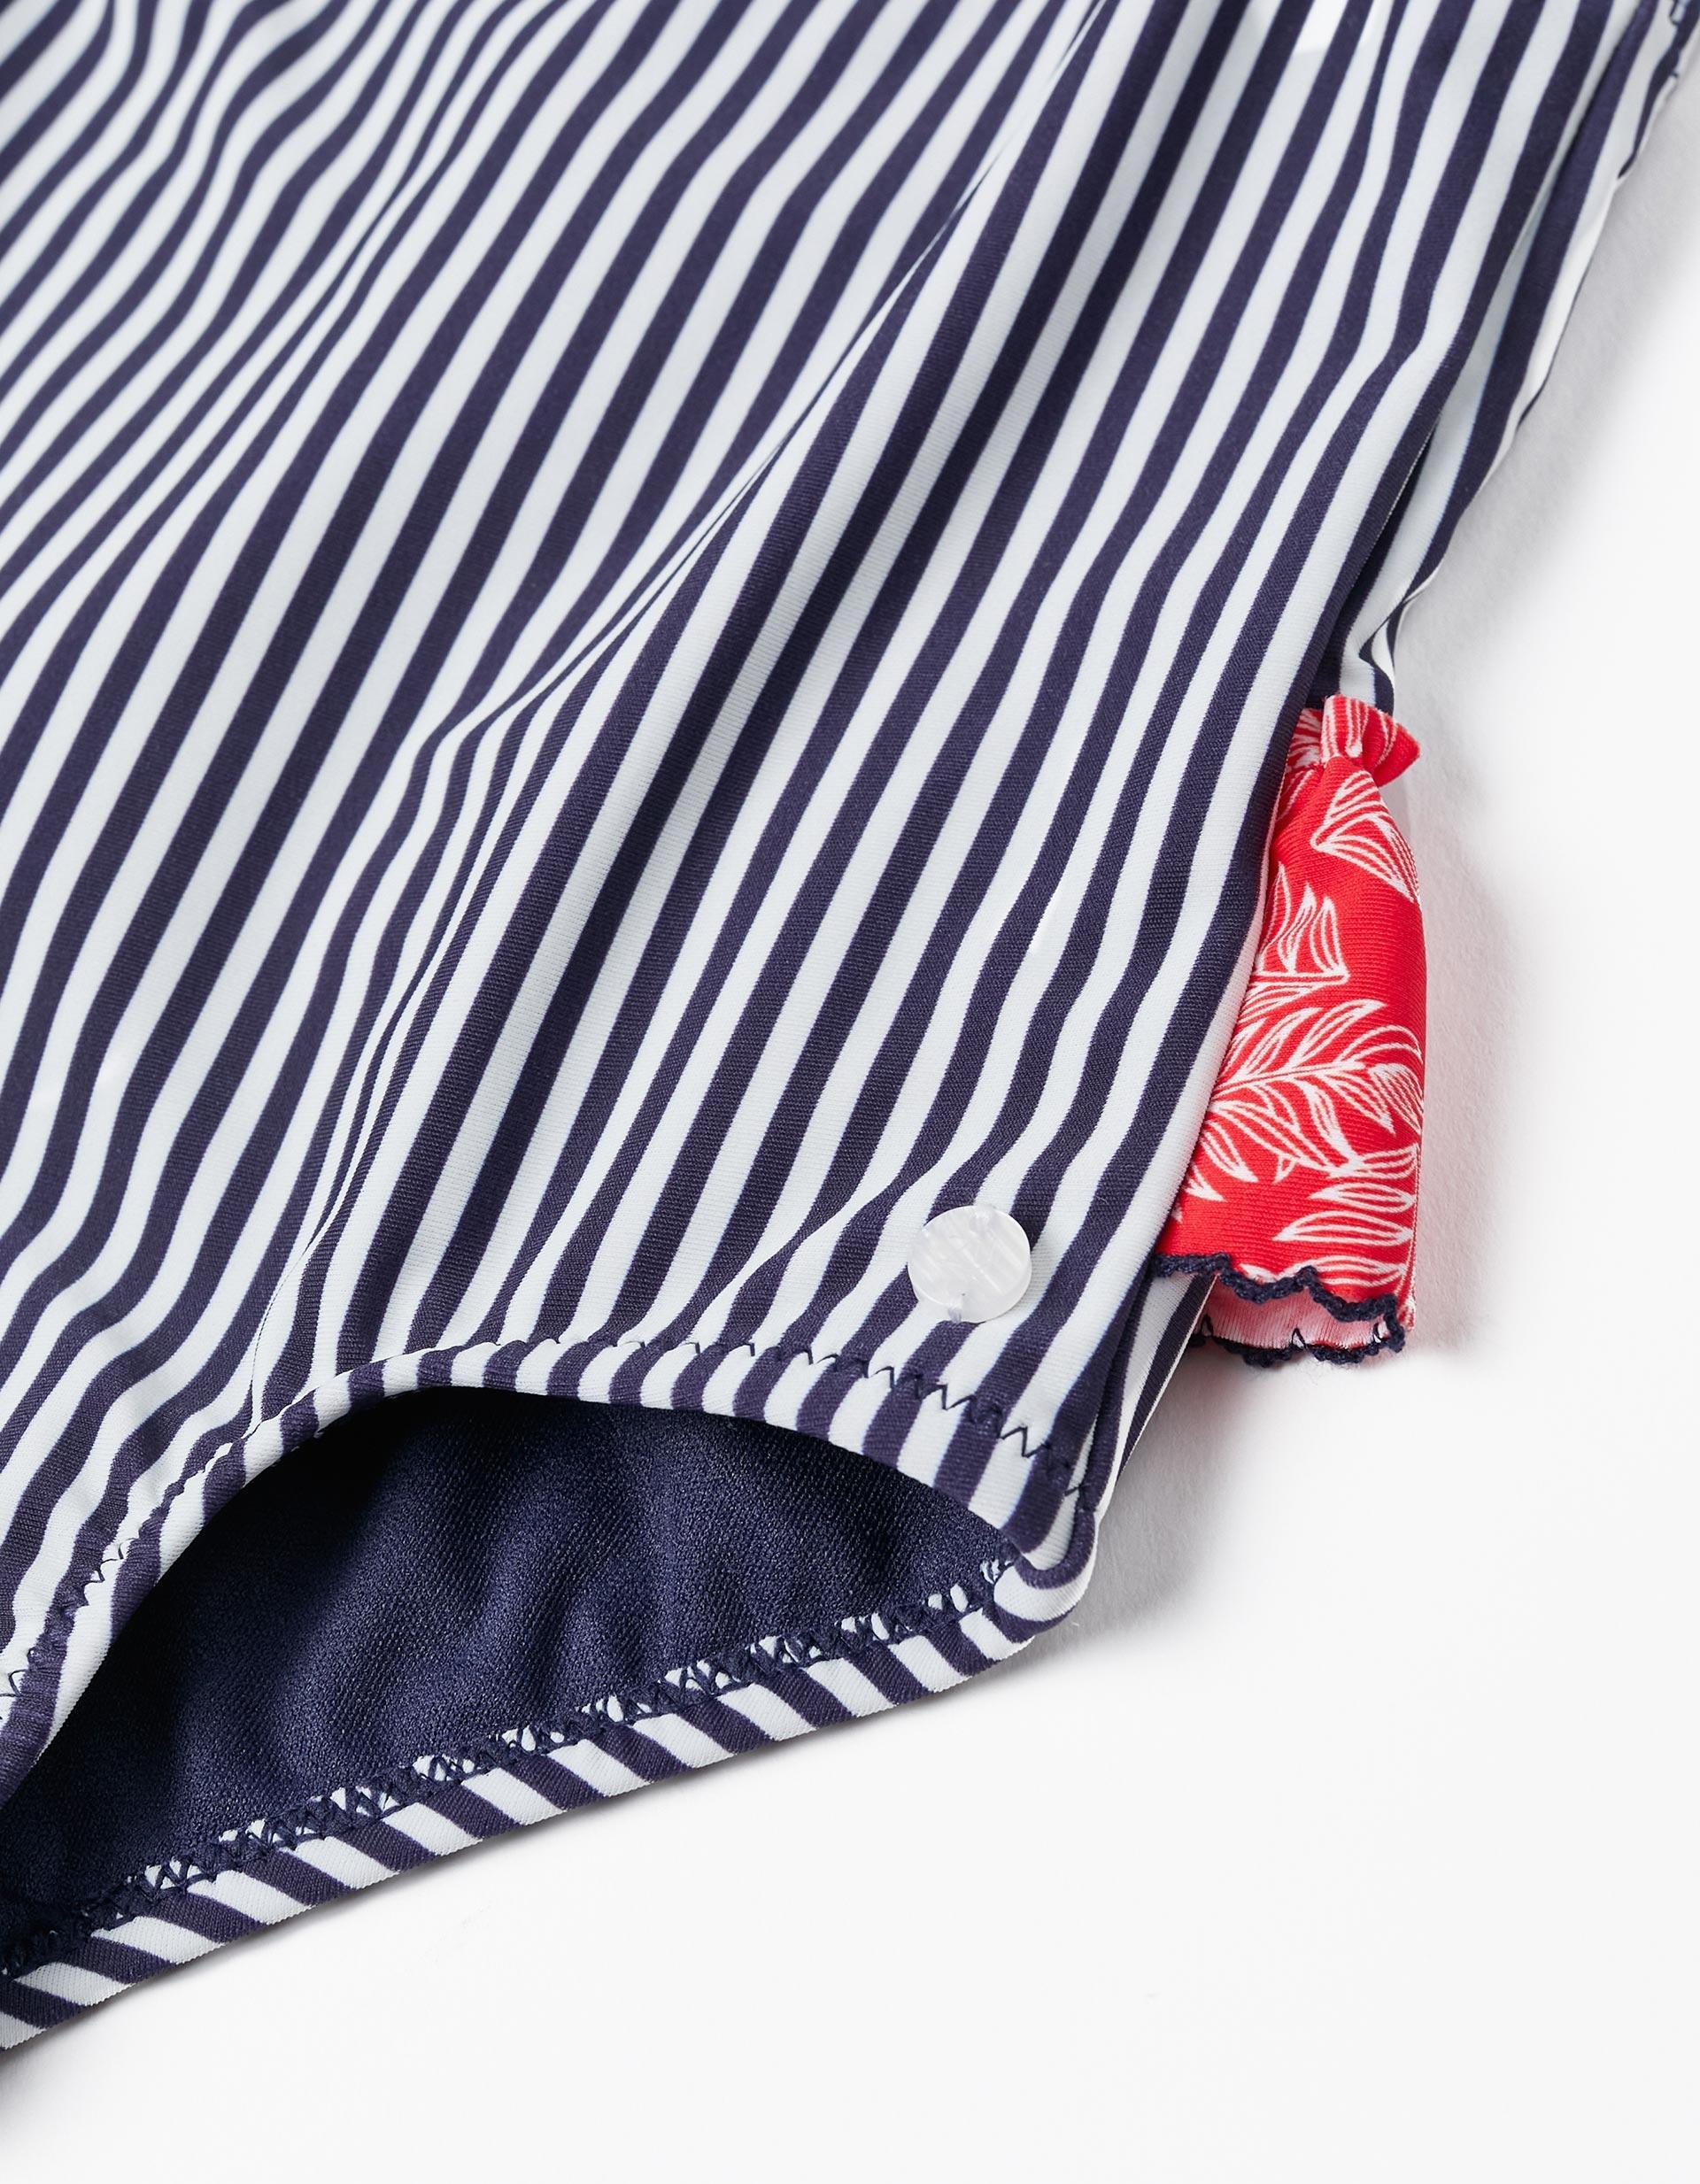 Gant - Multicolour Striped Swimsuit, Baby Girls